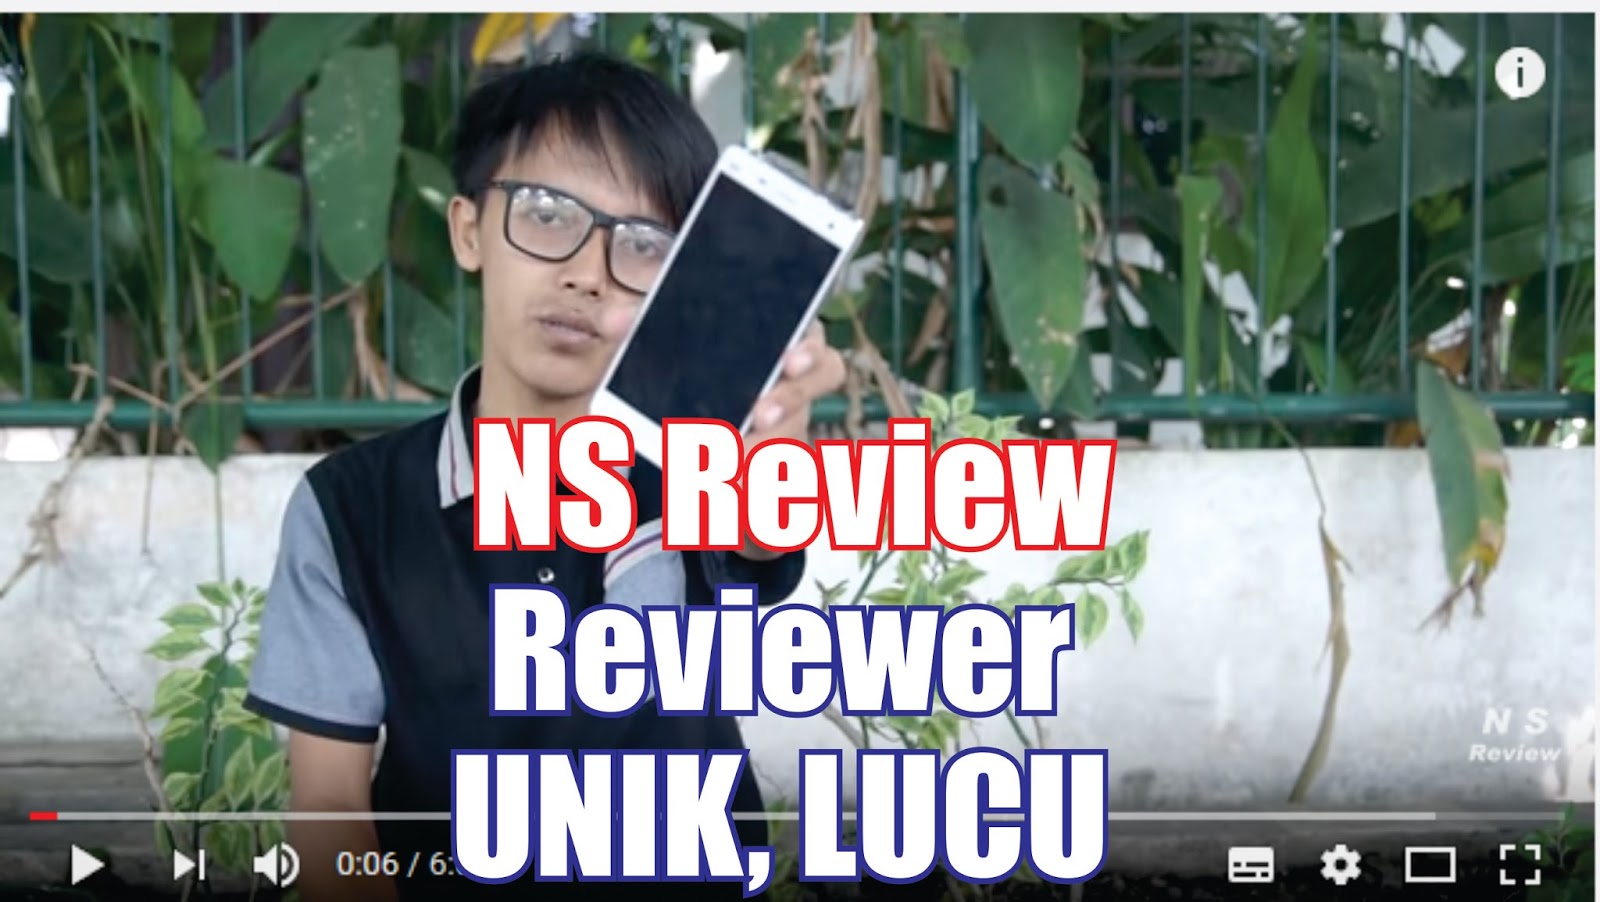 NS Review Channel Youtube Reviewer HP Unik Kocak Abis HapeHack